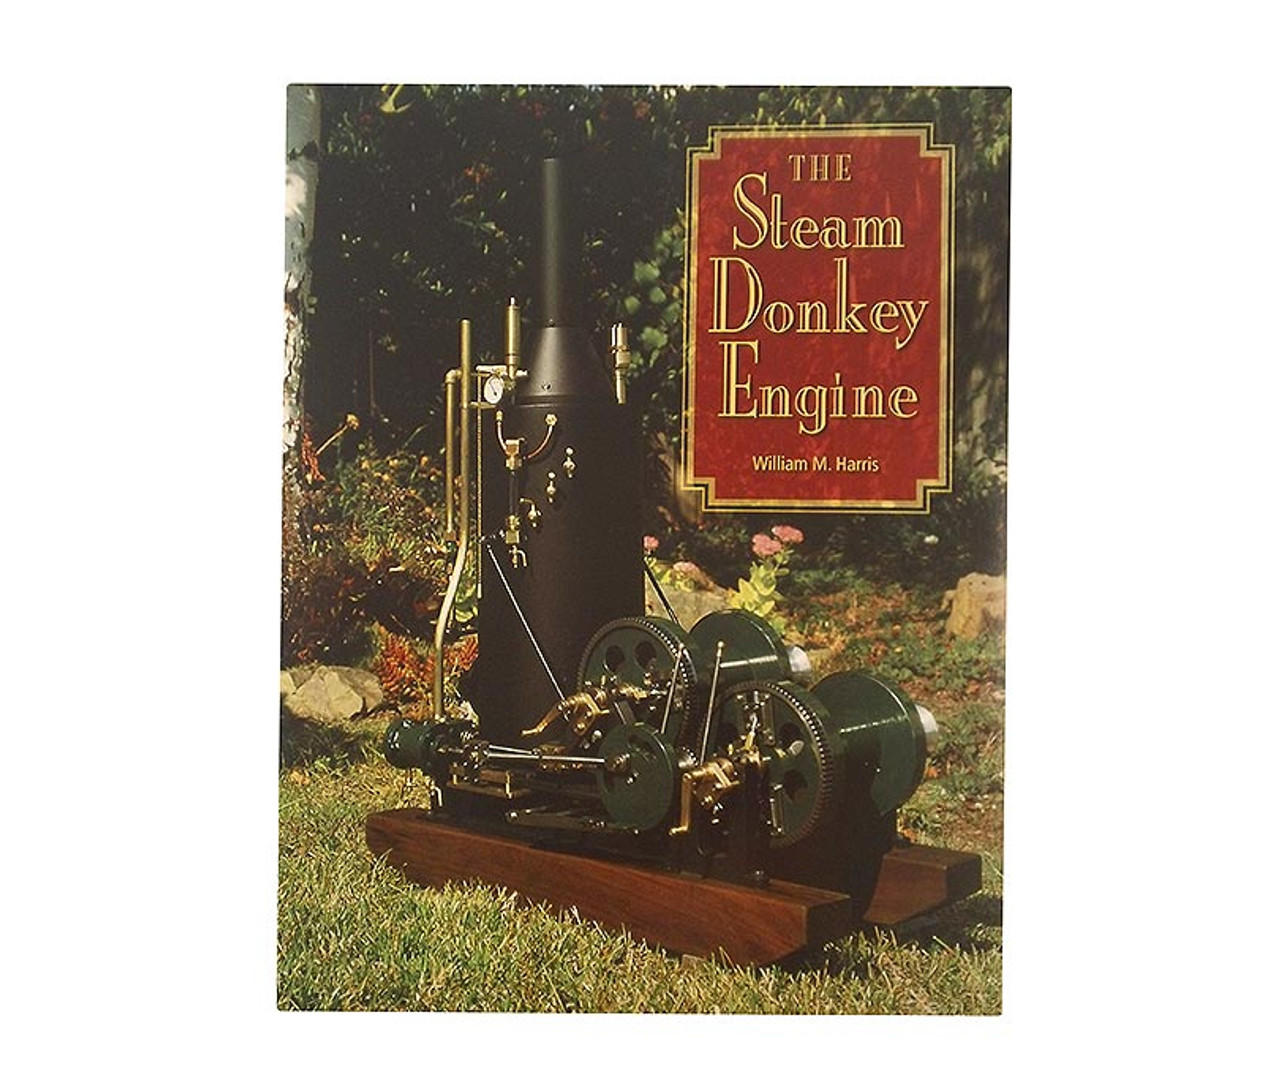 The Steam Donkey Engine